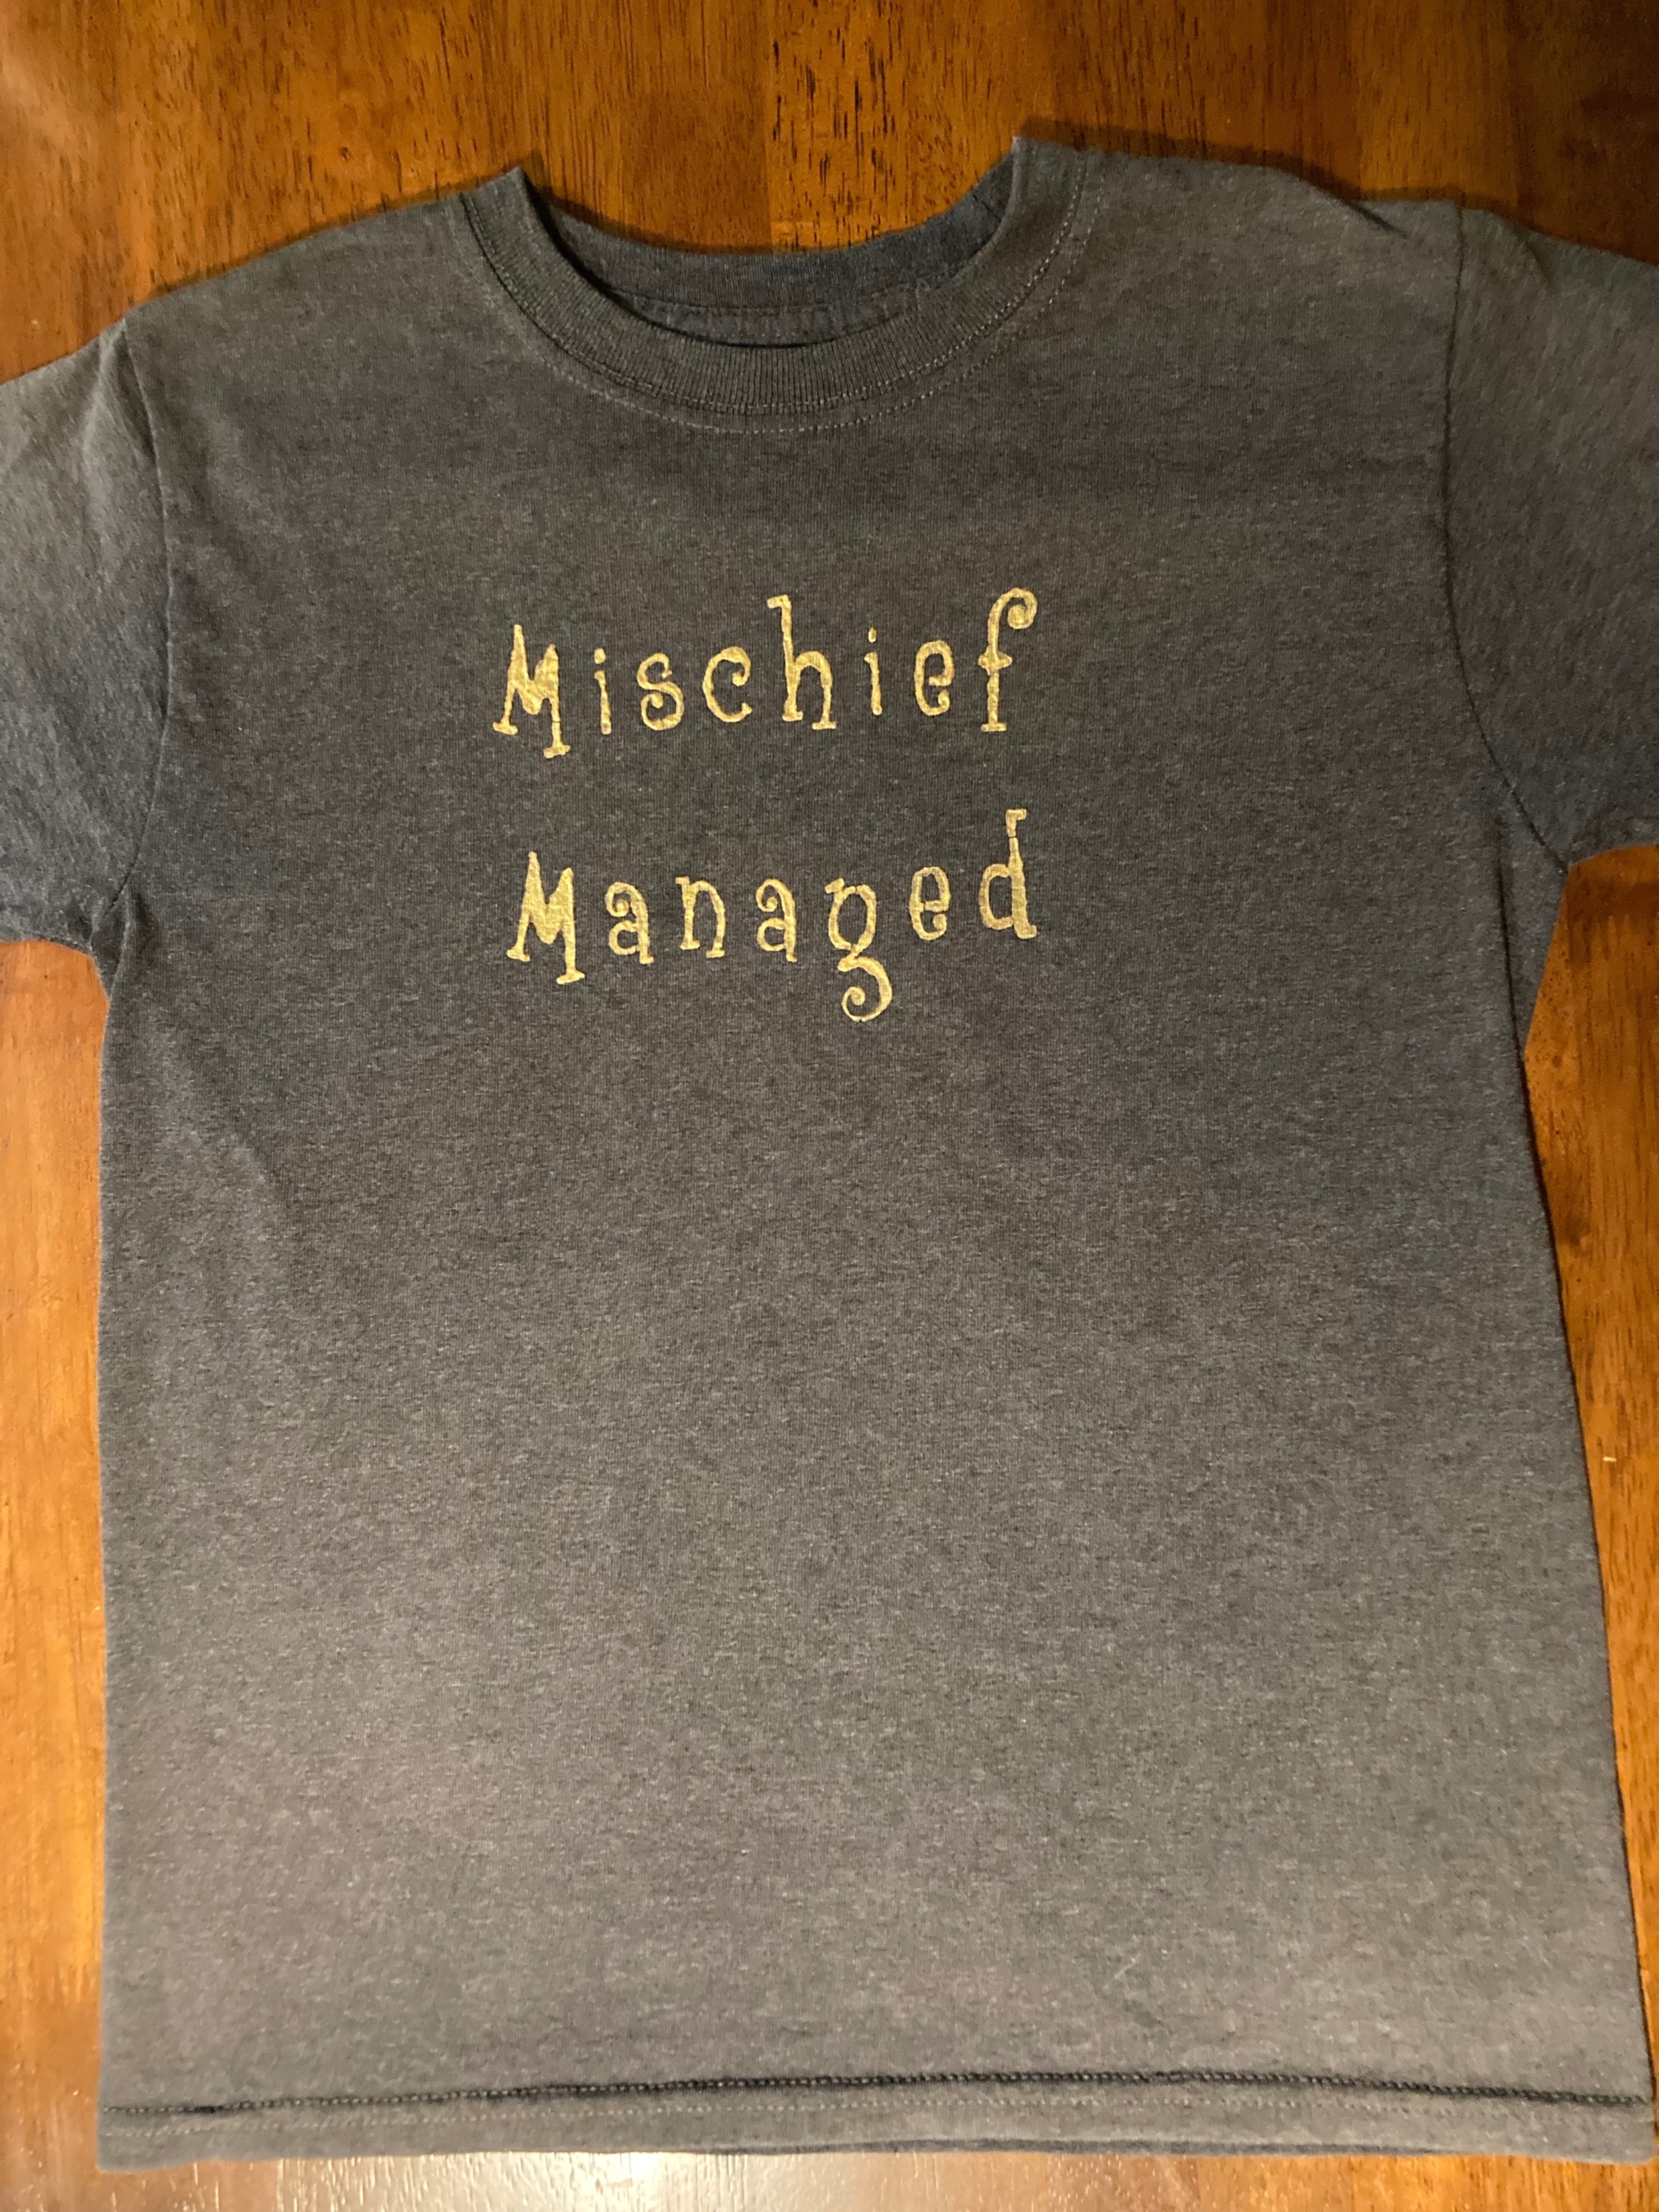 Mischief Manage written on a shirt